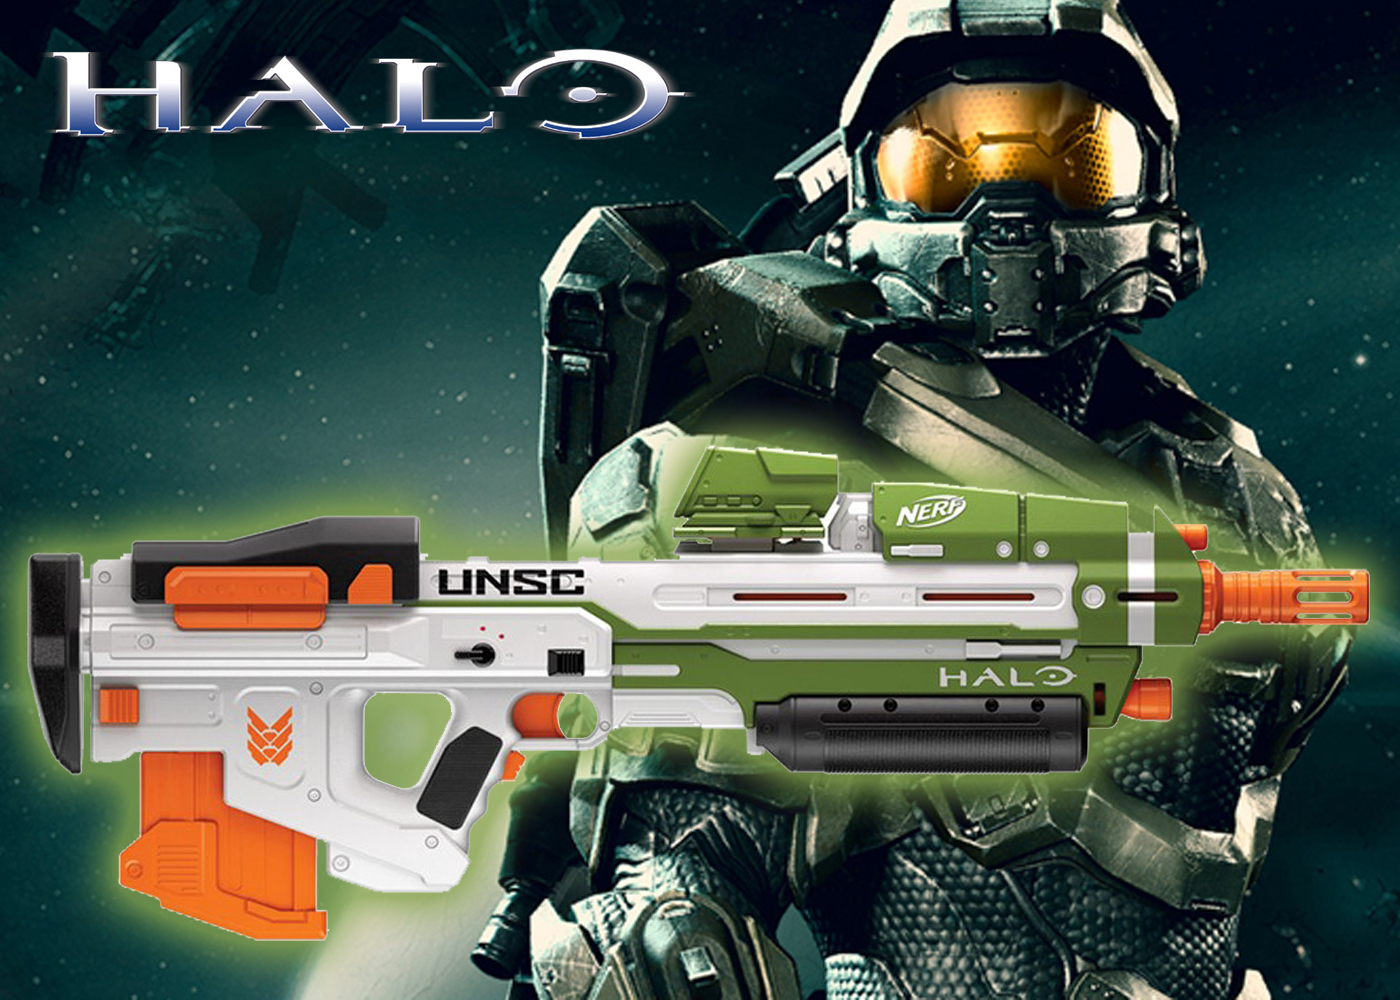 Nerf Halo Blaster